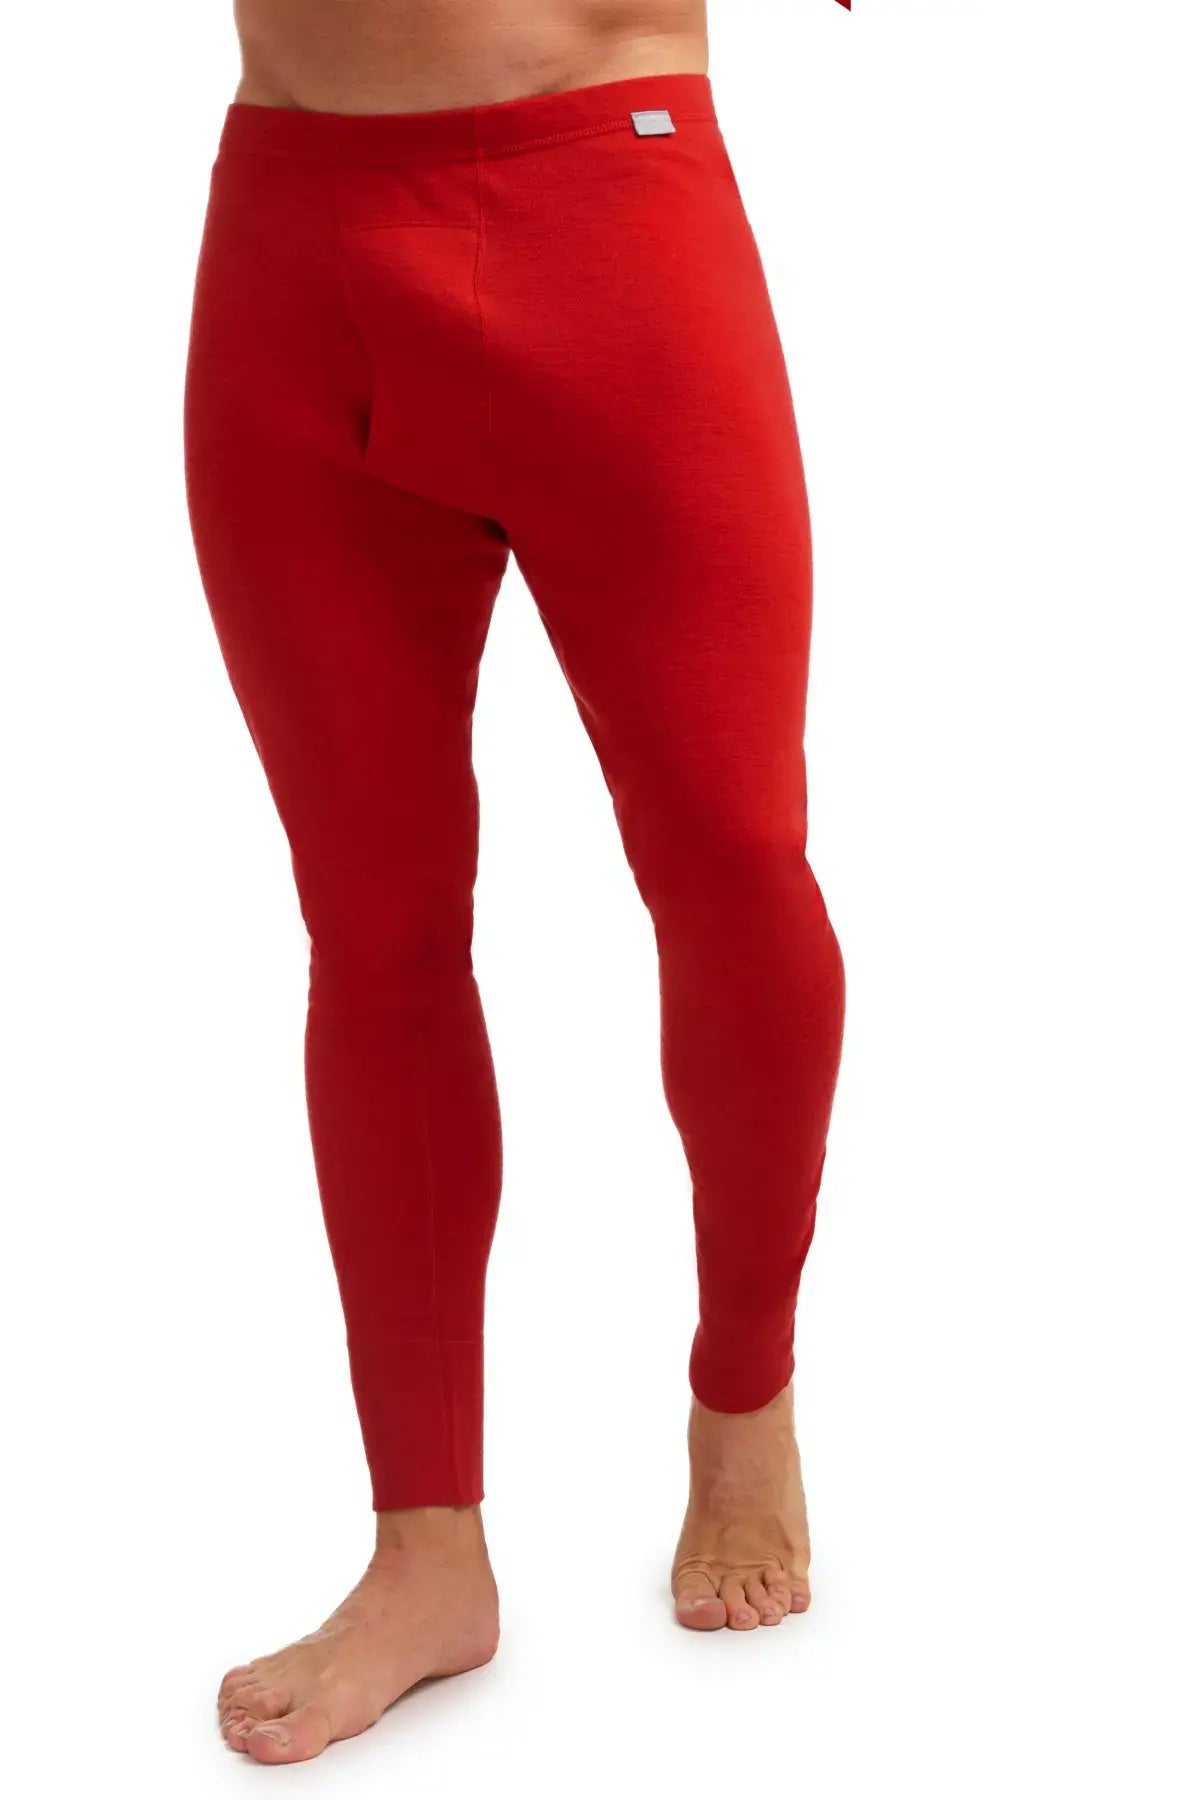 Merino Wool Pants - MidweightBase Layer, Bottom, Underwear, Thermal